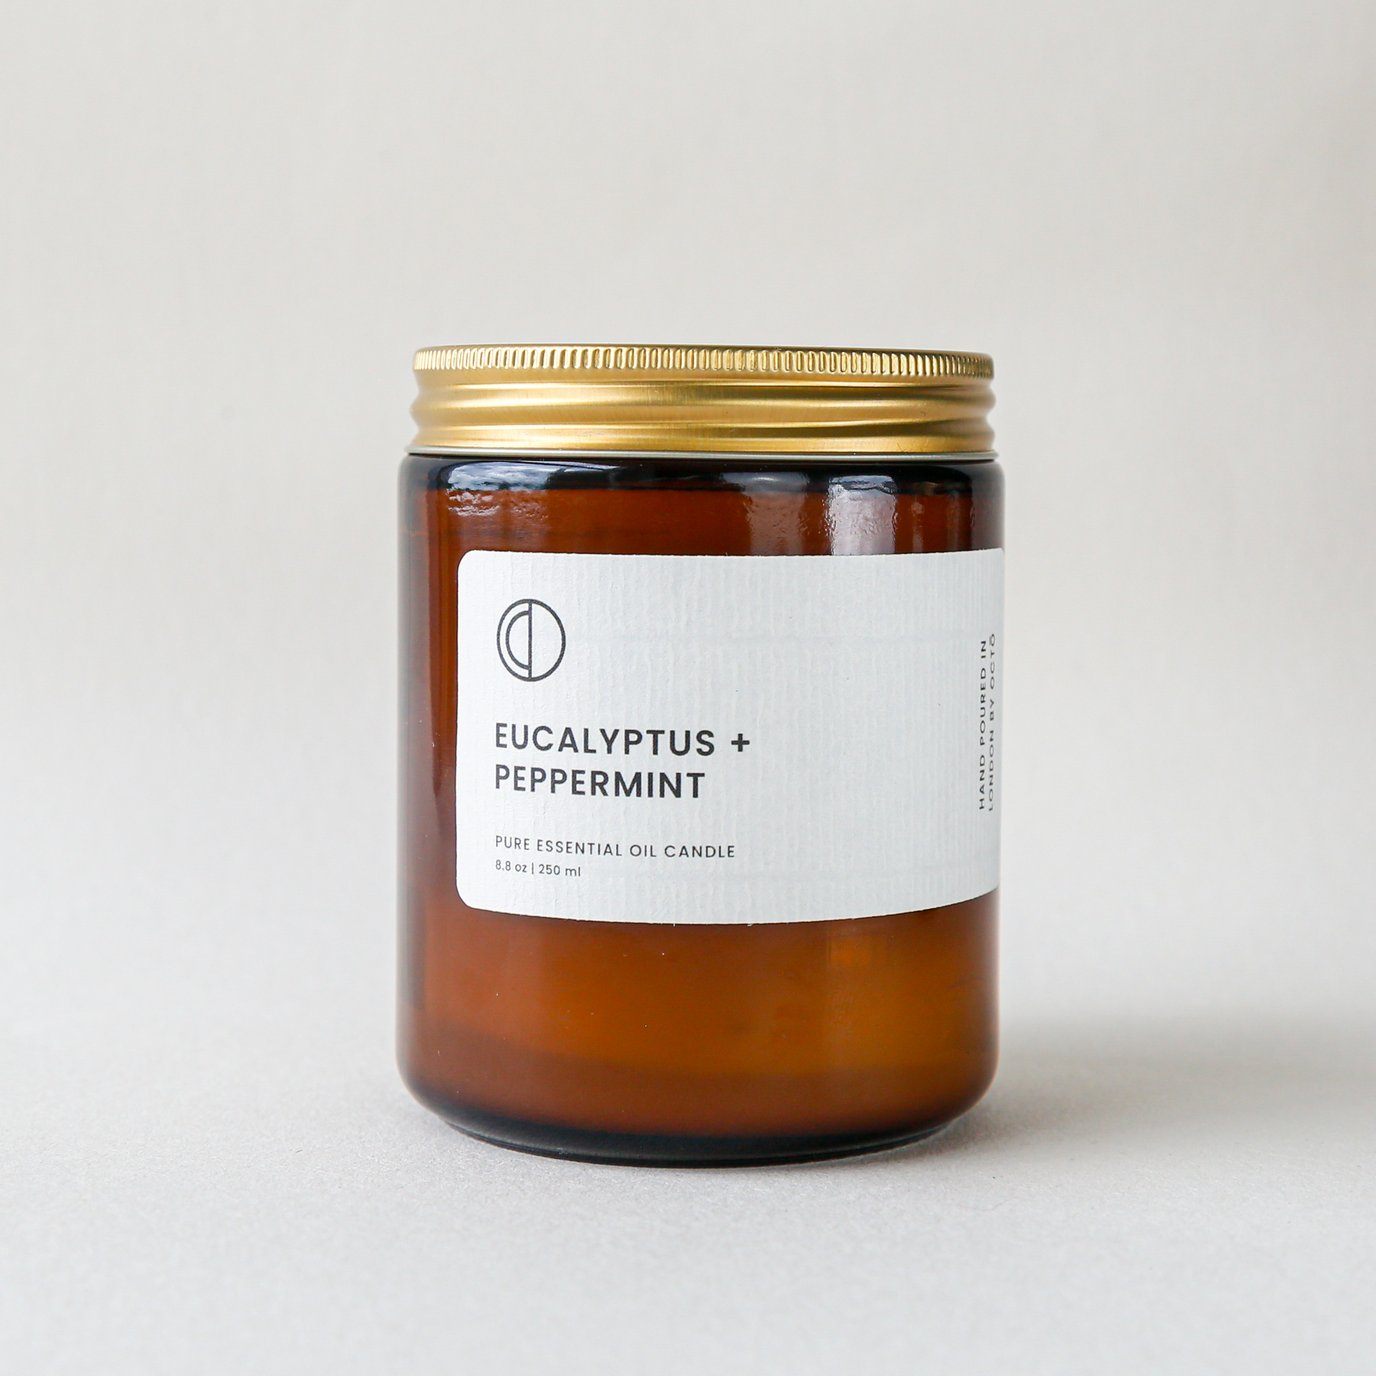 Eucalyptus + Peppermint Candle Kerzen Octo & Co. Medium 250ml - Amber Jar - Genuine Selection